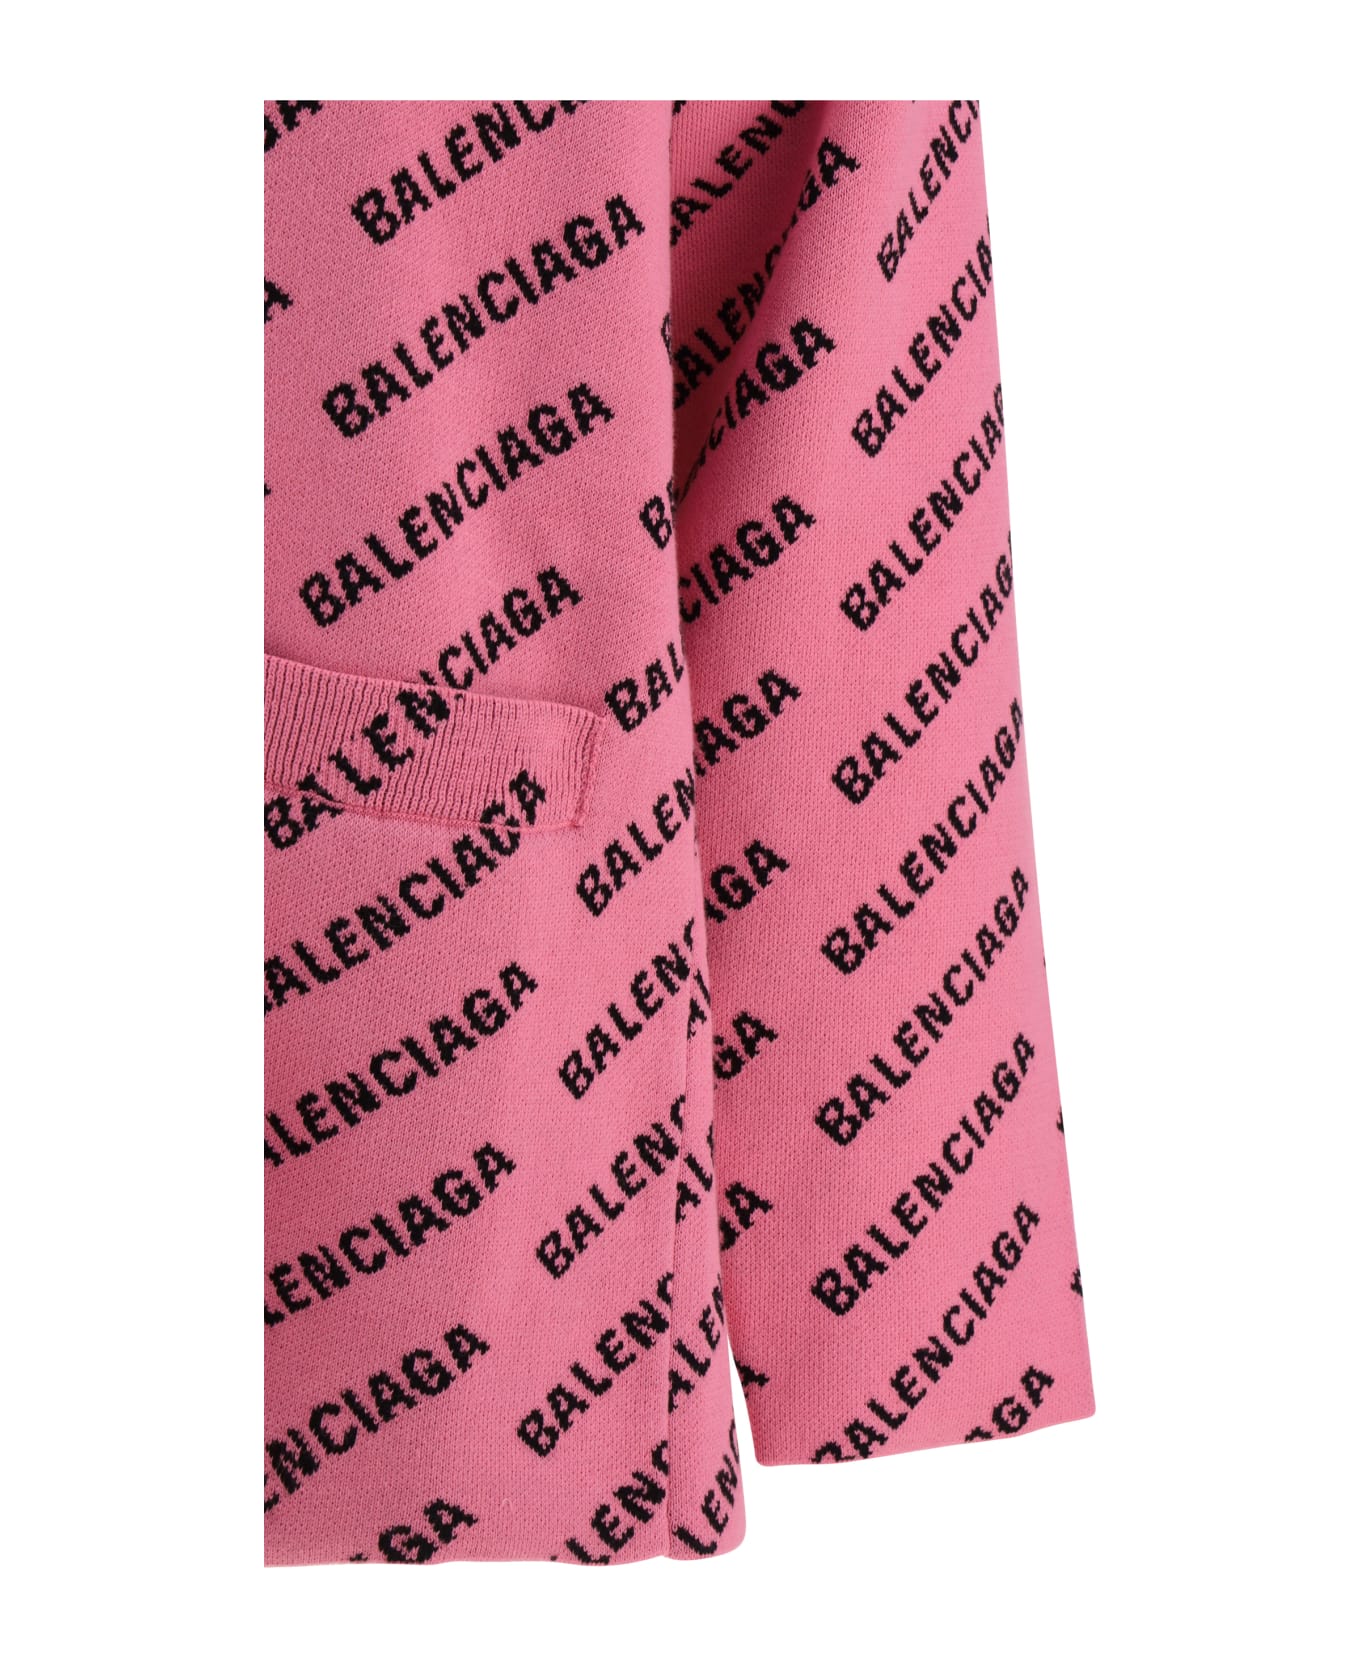 Balenciaga Cardigan - Pink/black カーディガン